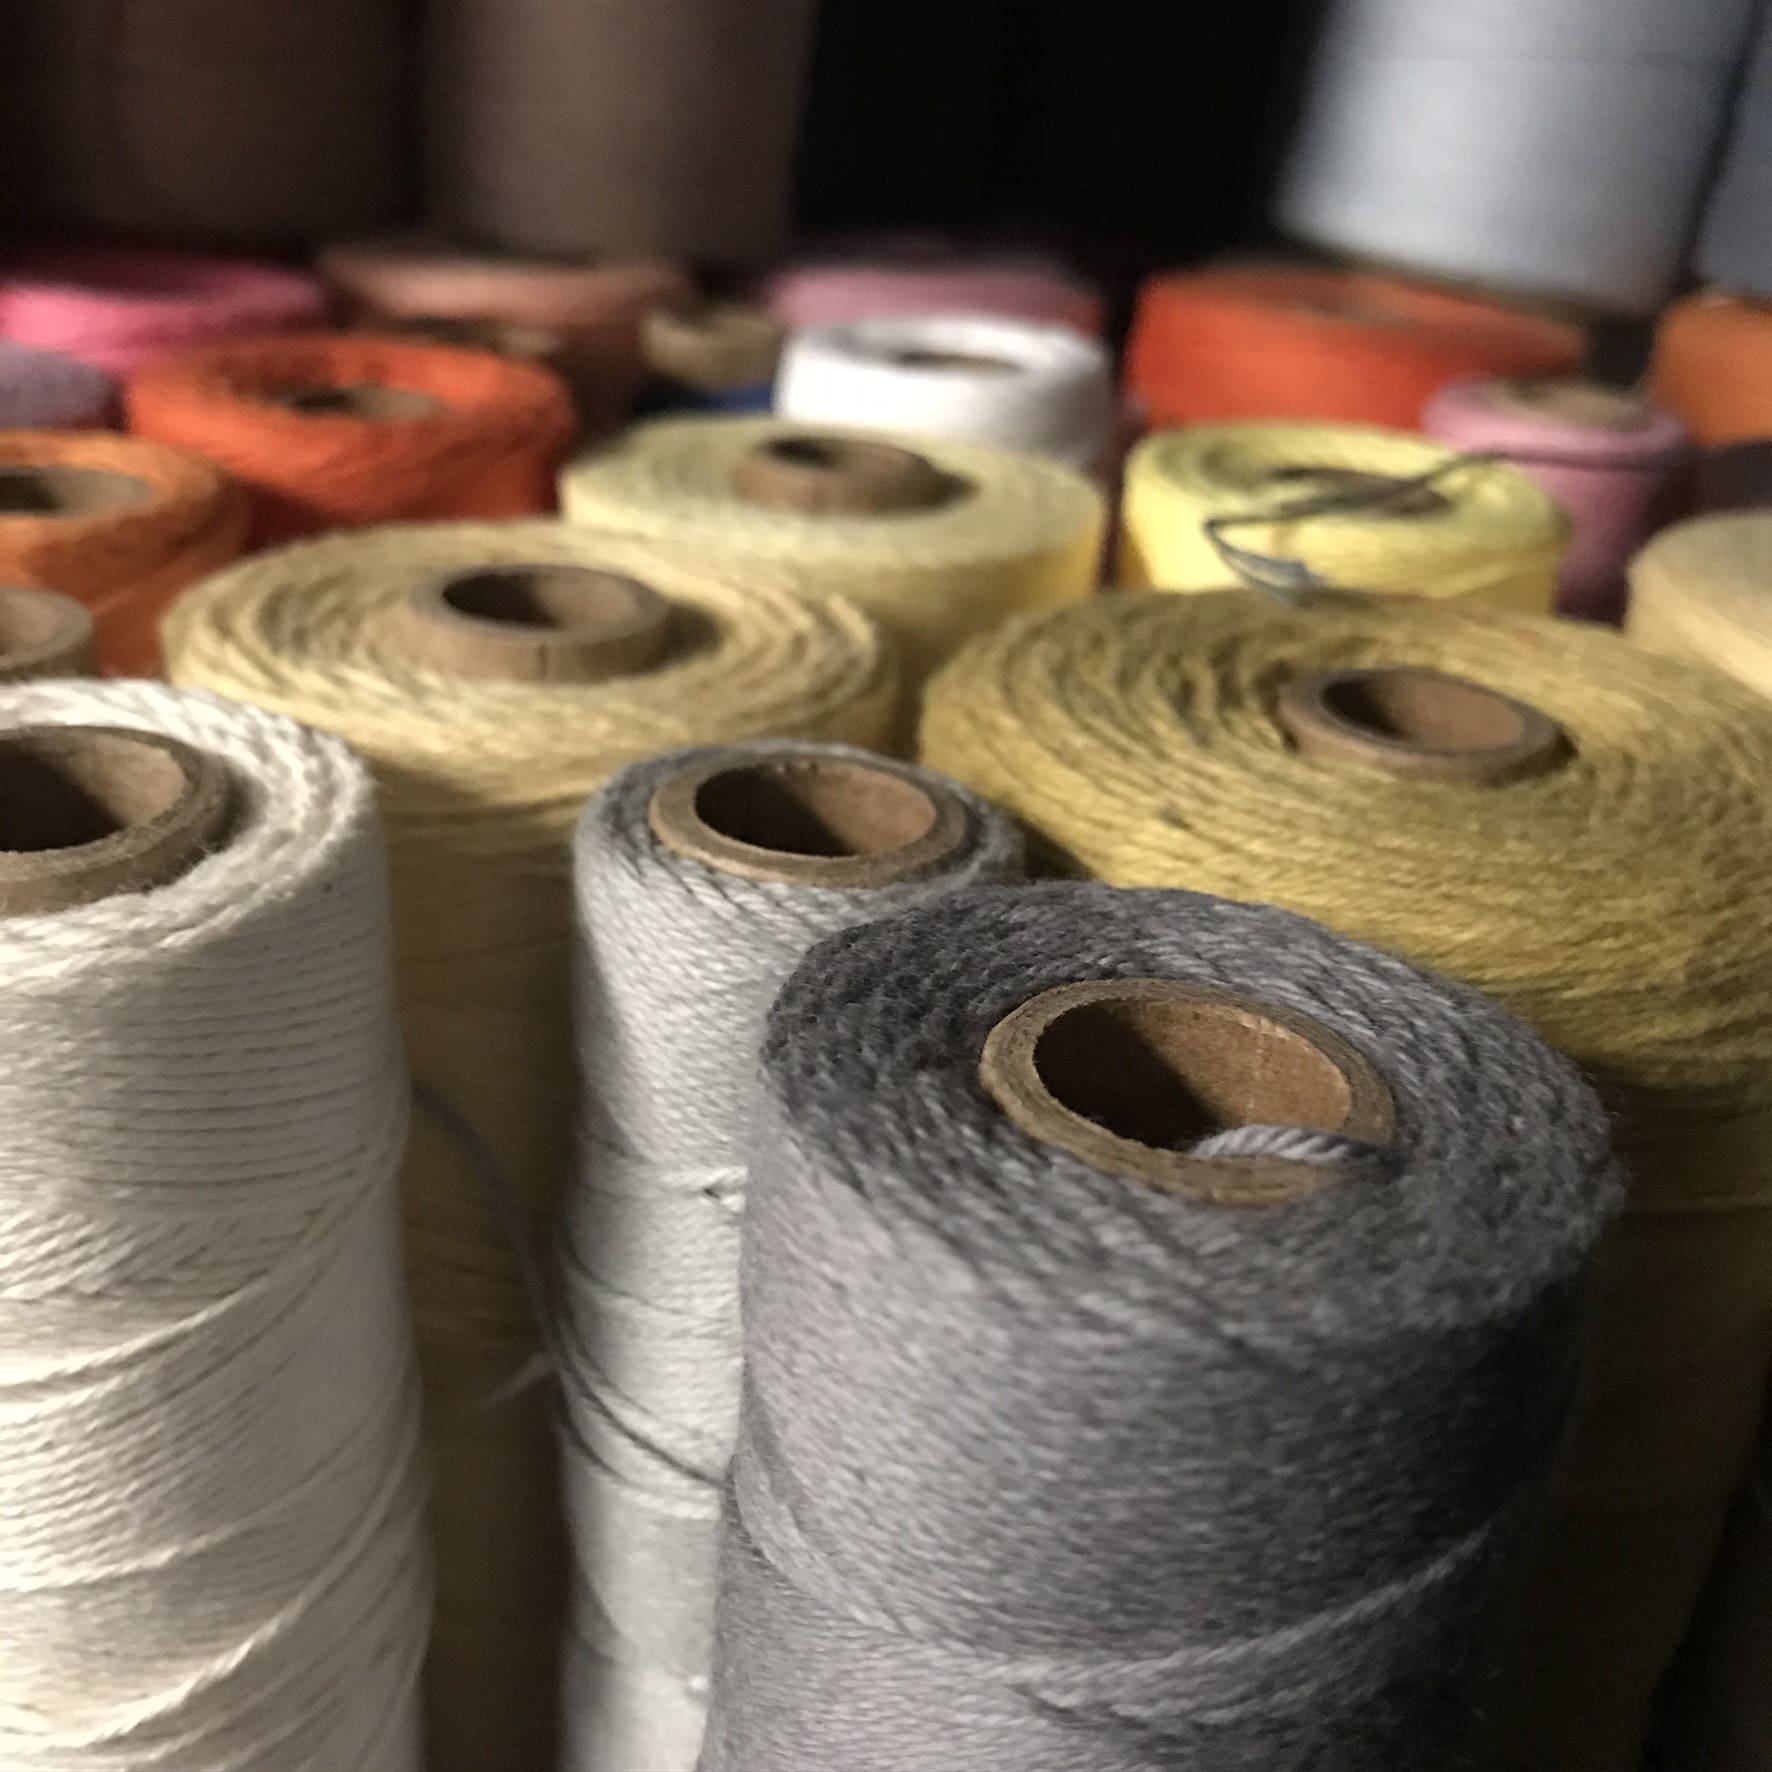 Cotton Weaving Yarn